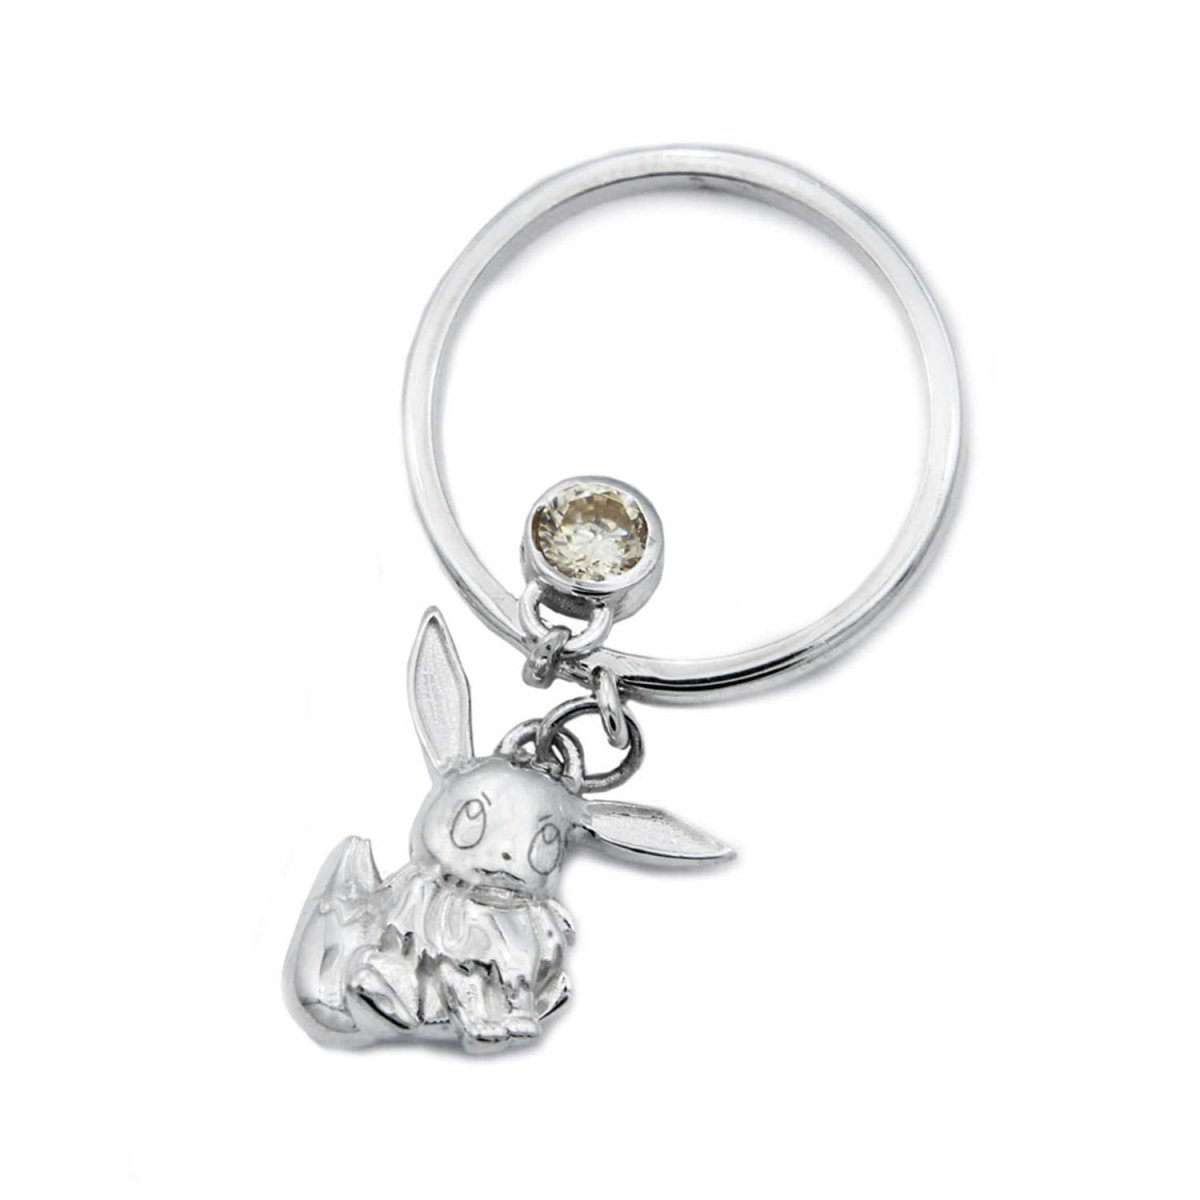 Eevee Jewelry: Eevee Solitaire Ring | Pokémon Center Official Site